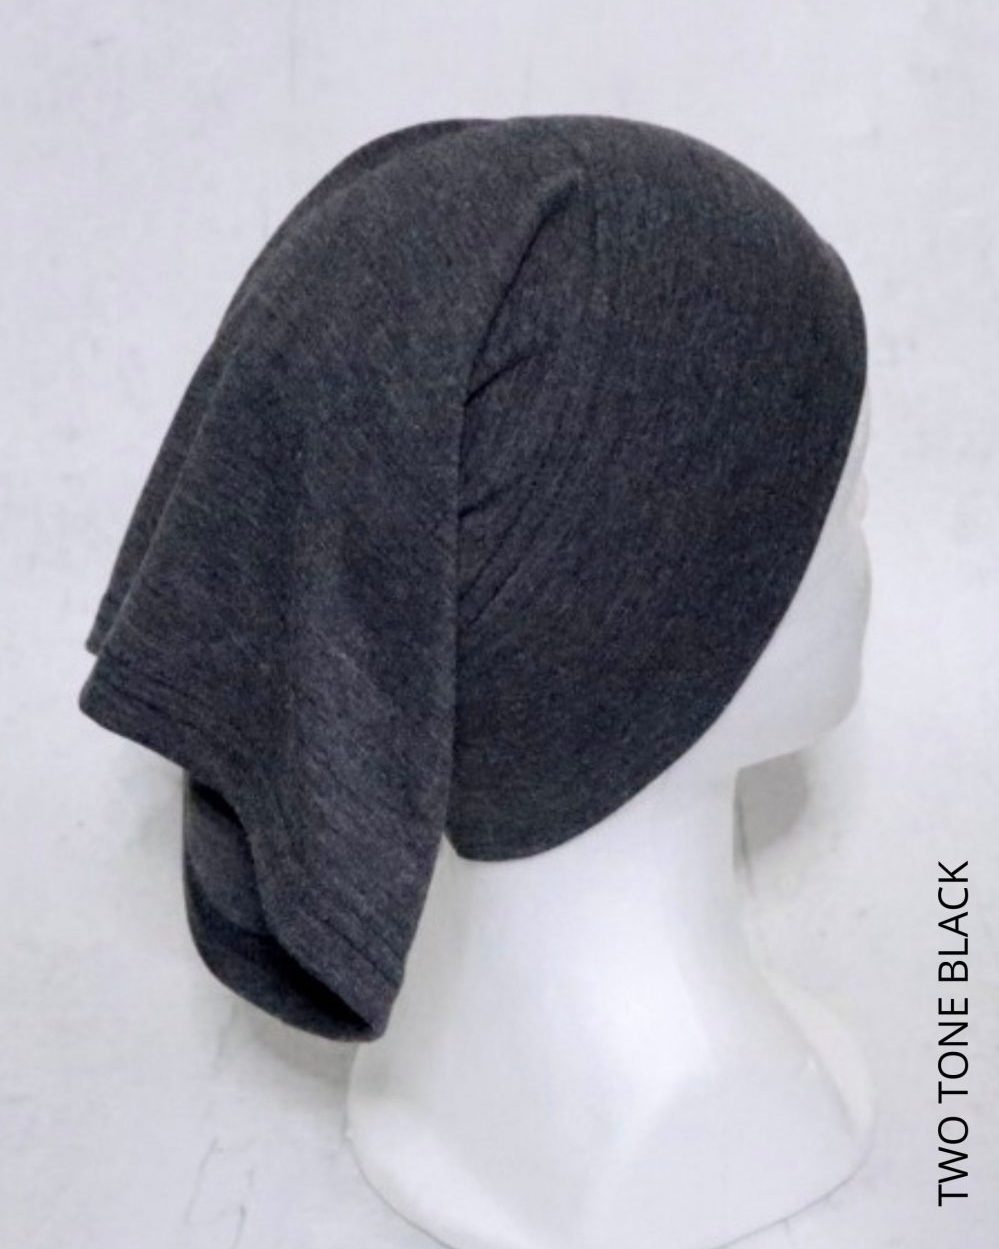 Japanese Cotton Head Cap Two Tone Black